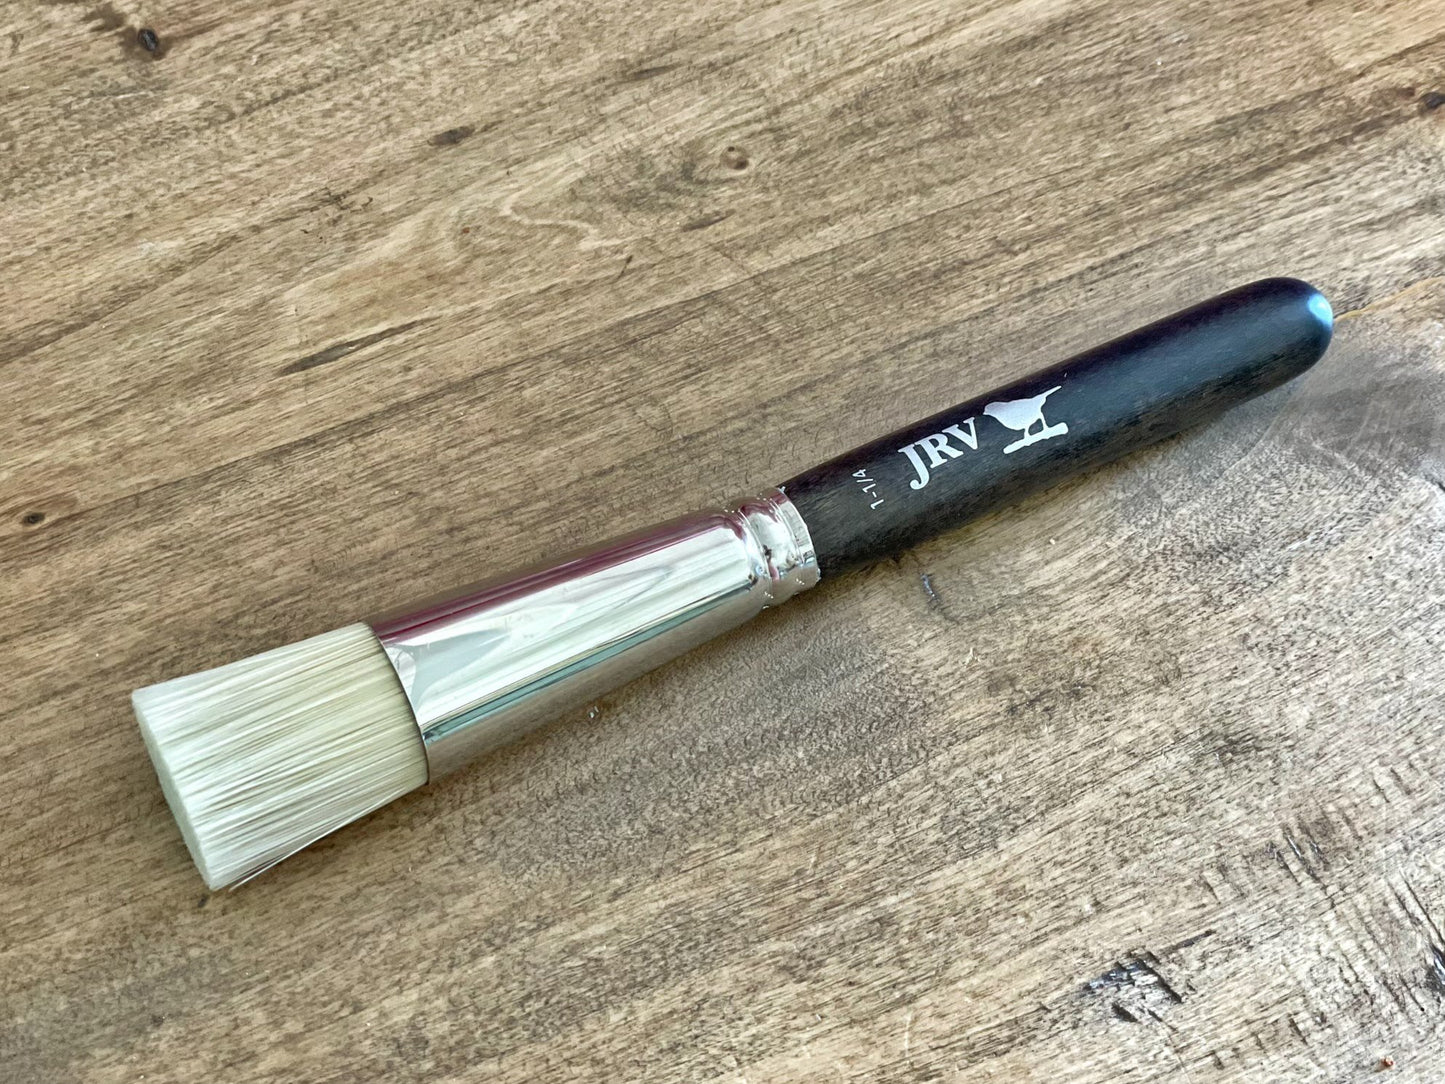 JRV Stencil Brushes (4 different sizes)